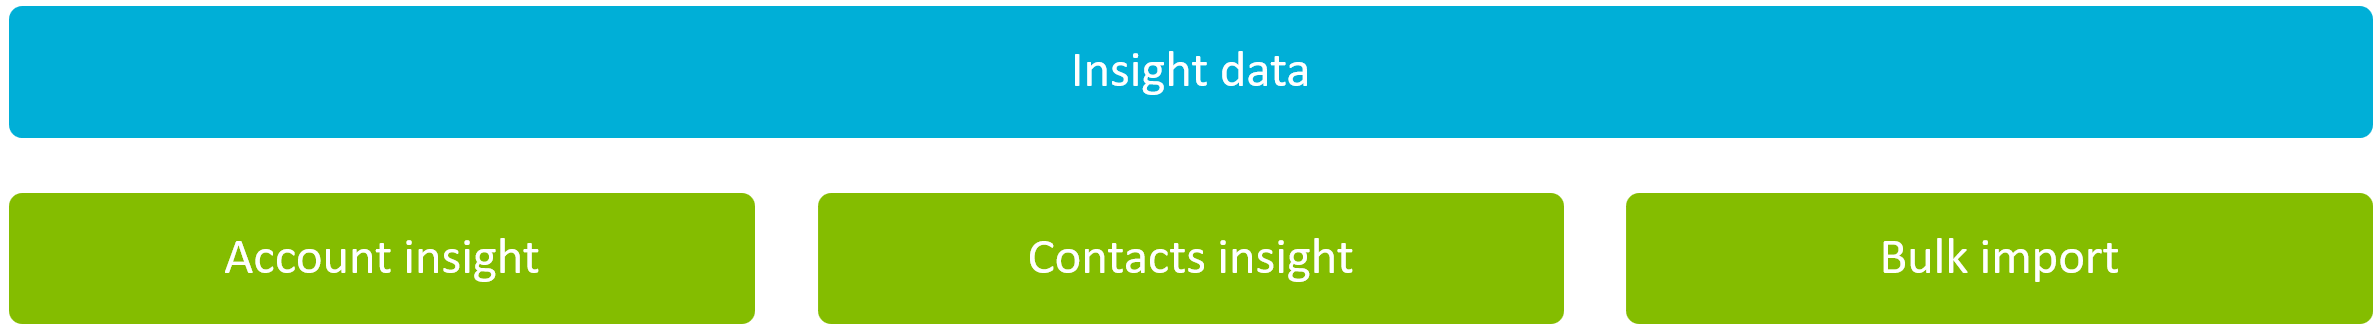 "Insight data" functionality